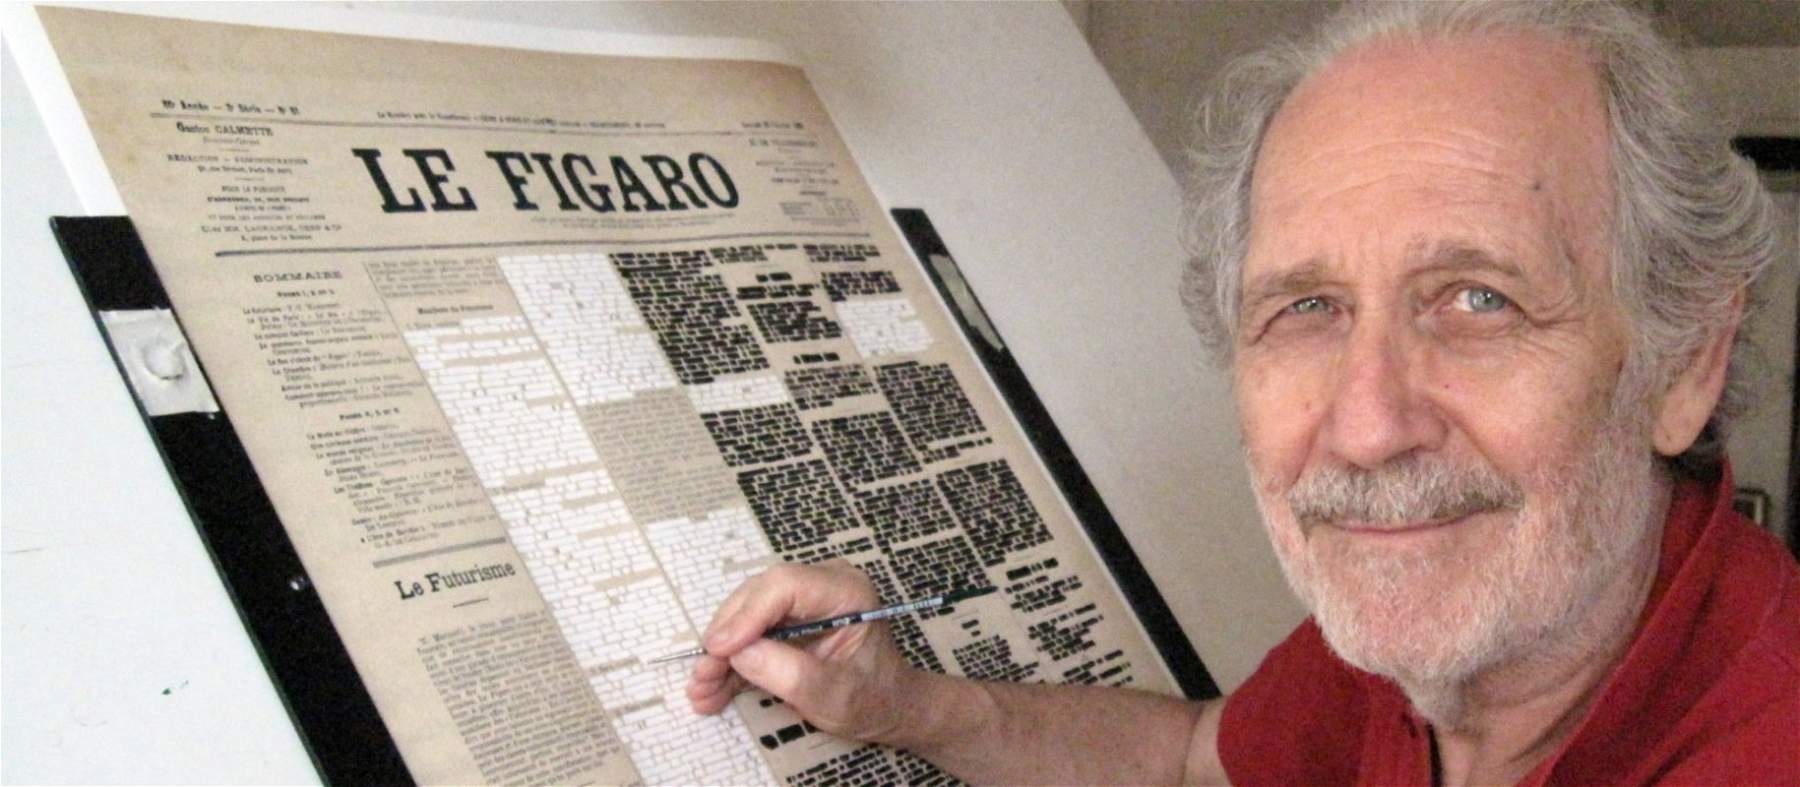 Emilio IsgrÃ² rereads Leonardo da Vinci's Battle of Anghiari. I will try to make a work that speaks to many